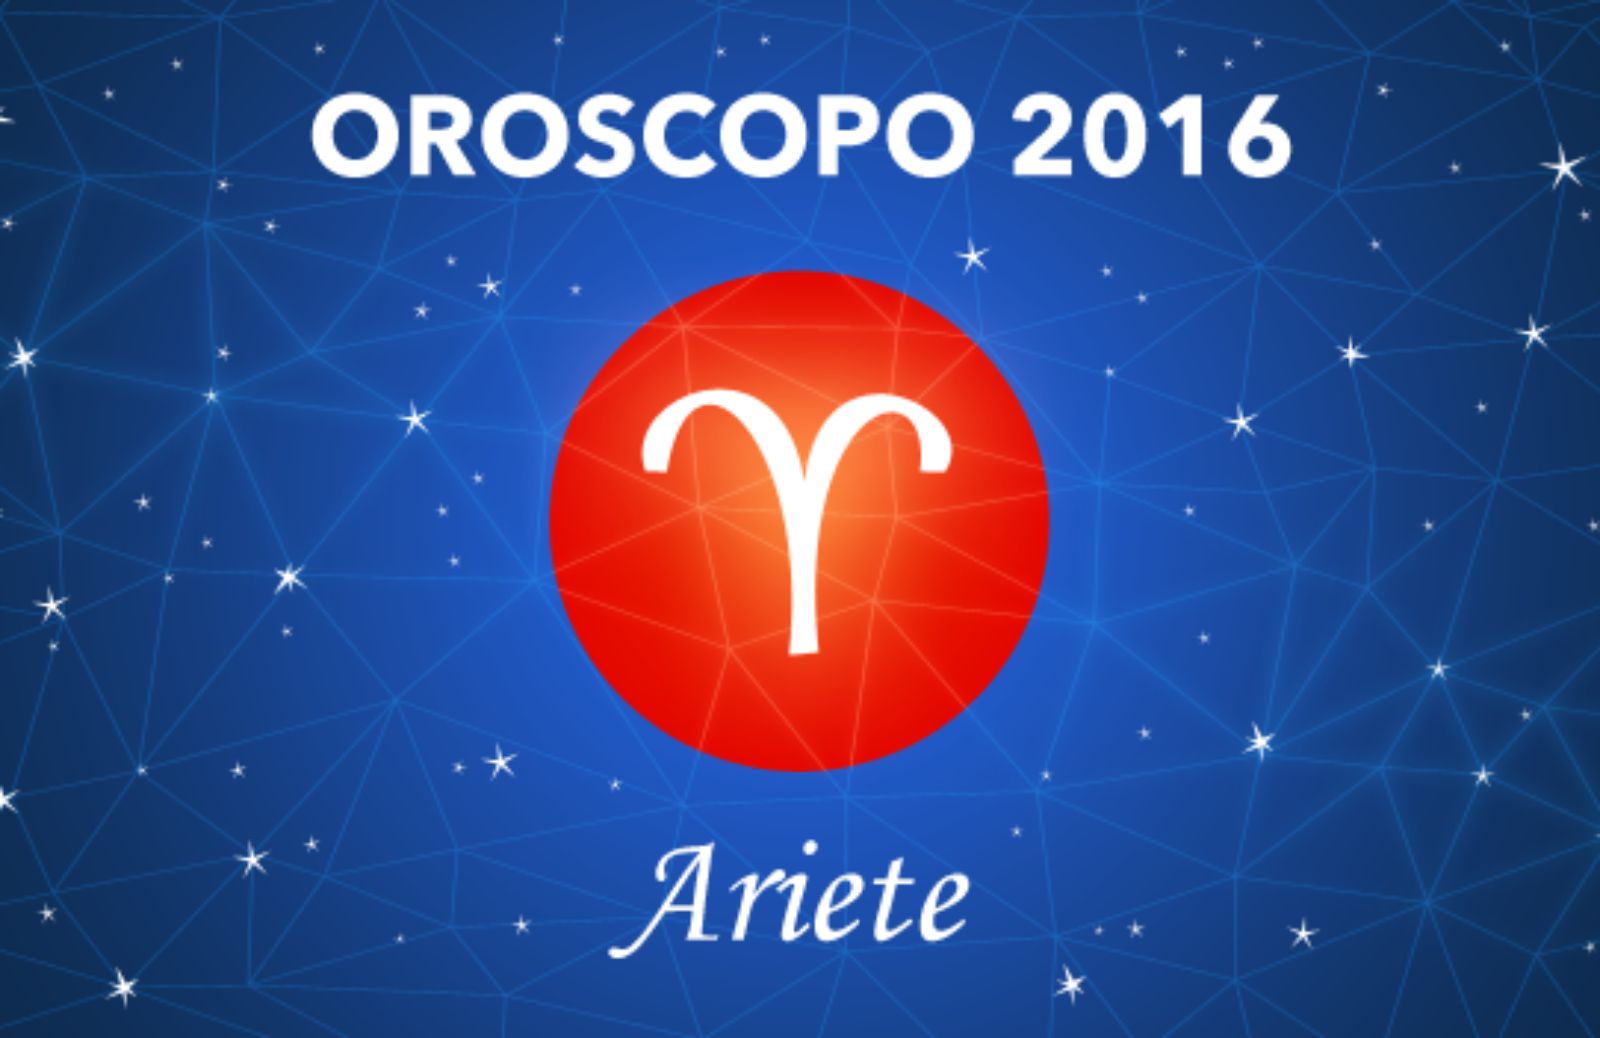 Oroscopo 2016 - Ariete